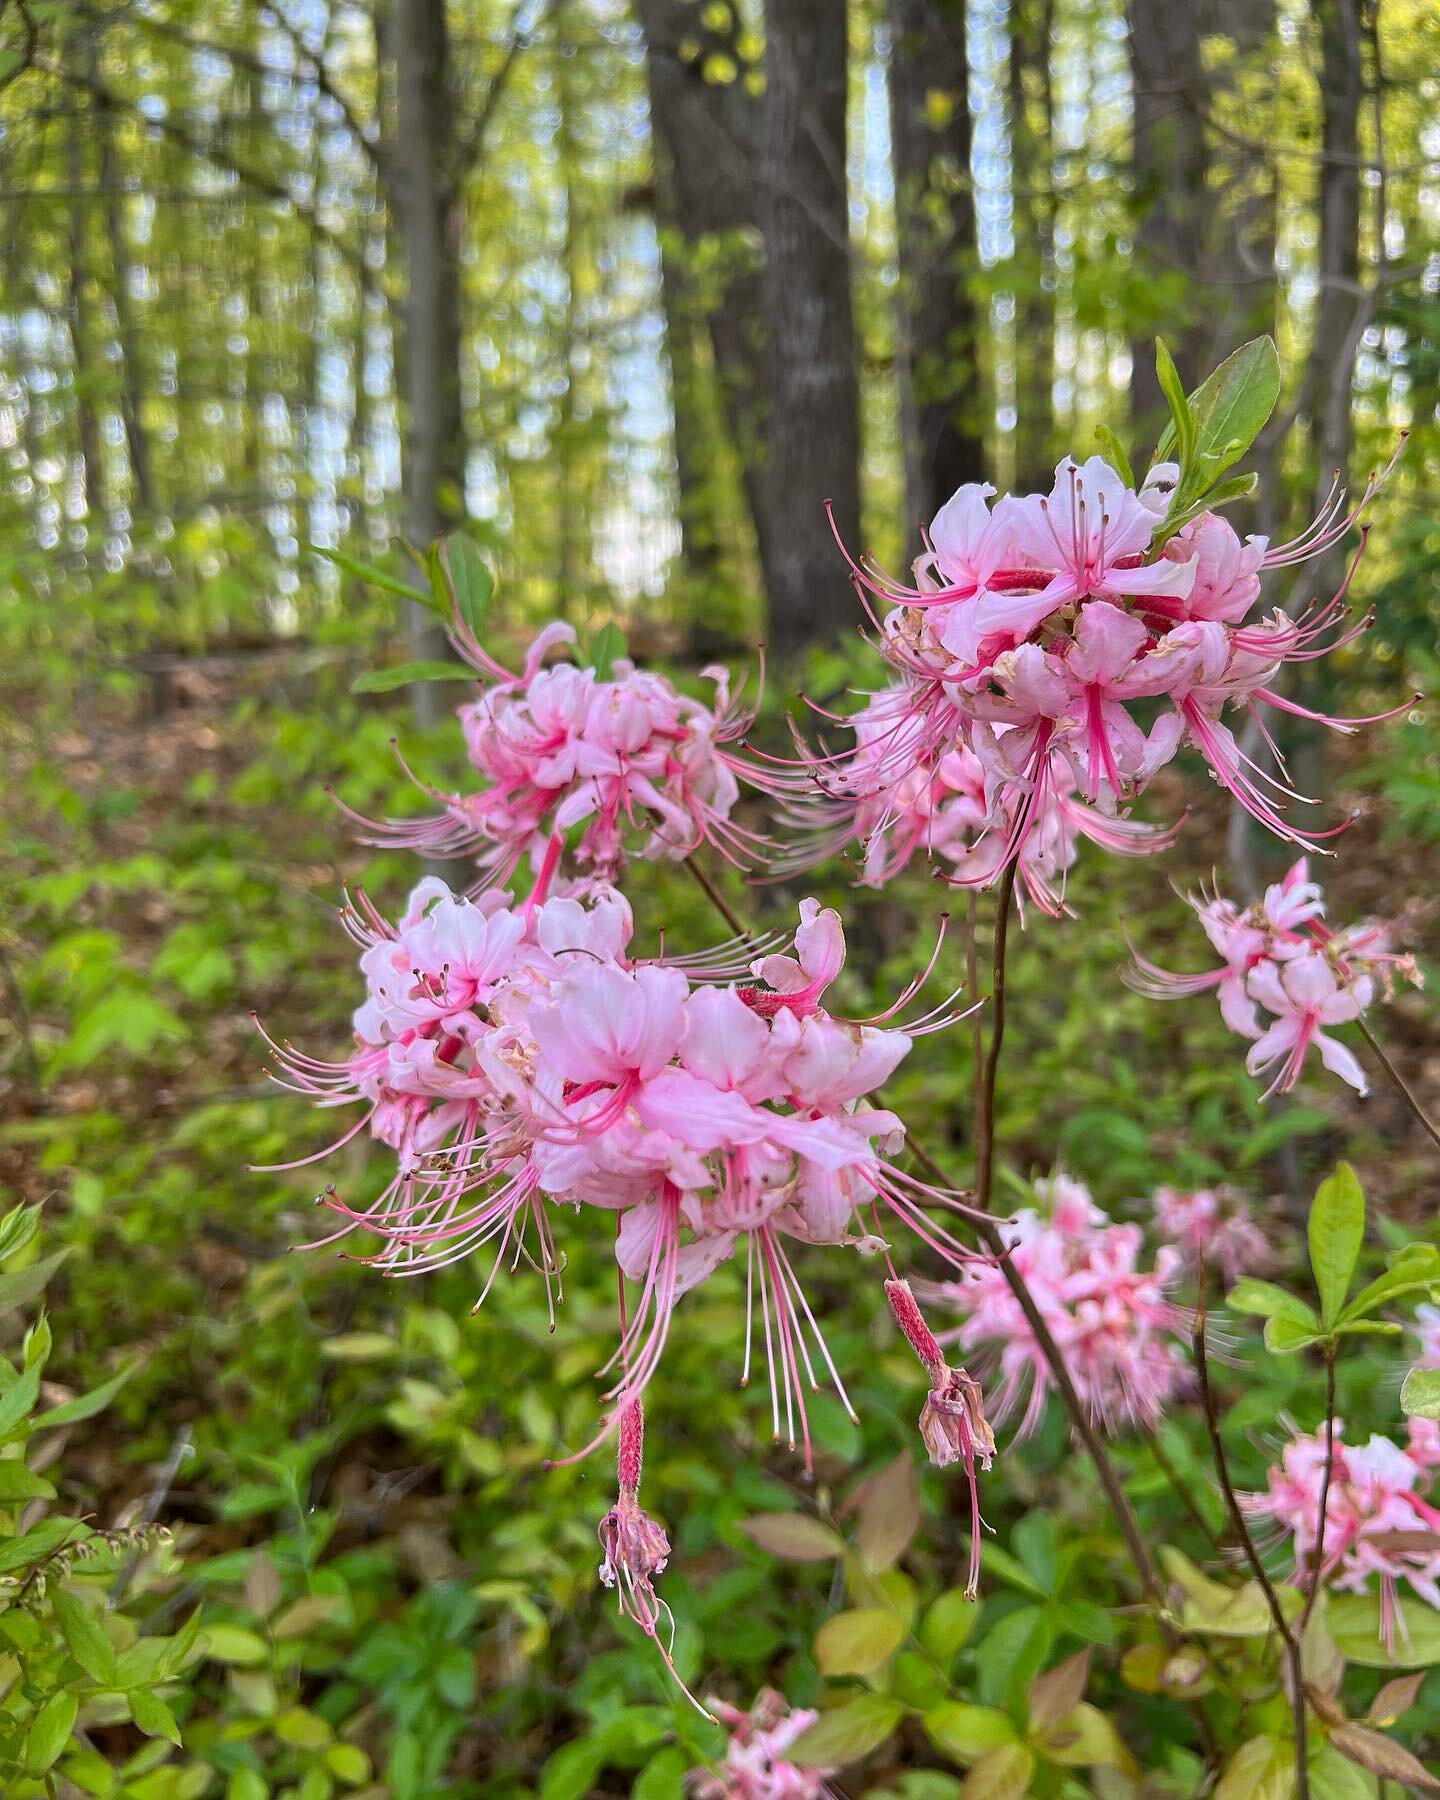 Wild Azaleas or Pinxter Flowers blooming  #wildflowers  #nativeplants #virginia #rva #nature #hike #plants #spring #hiking #optoutside #azalea #forest #flowers #floraofvirginia